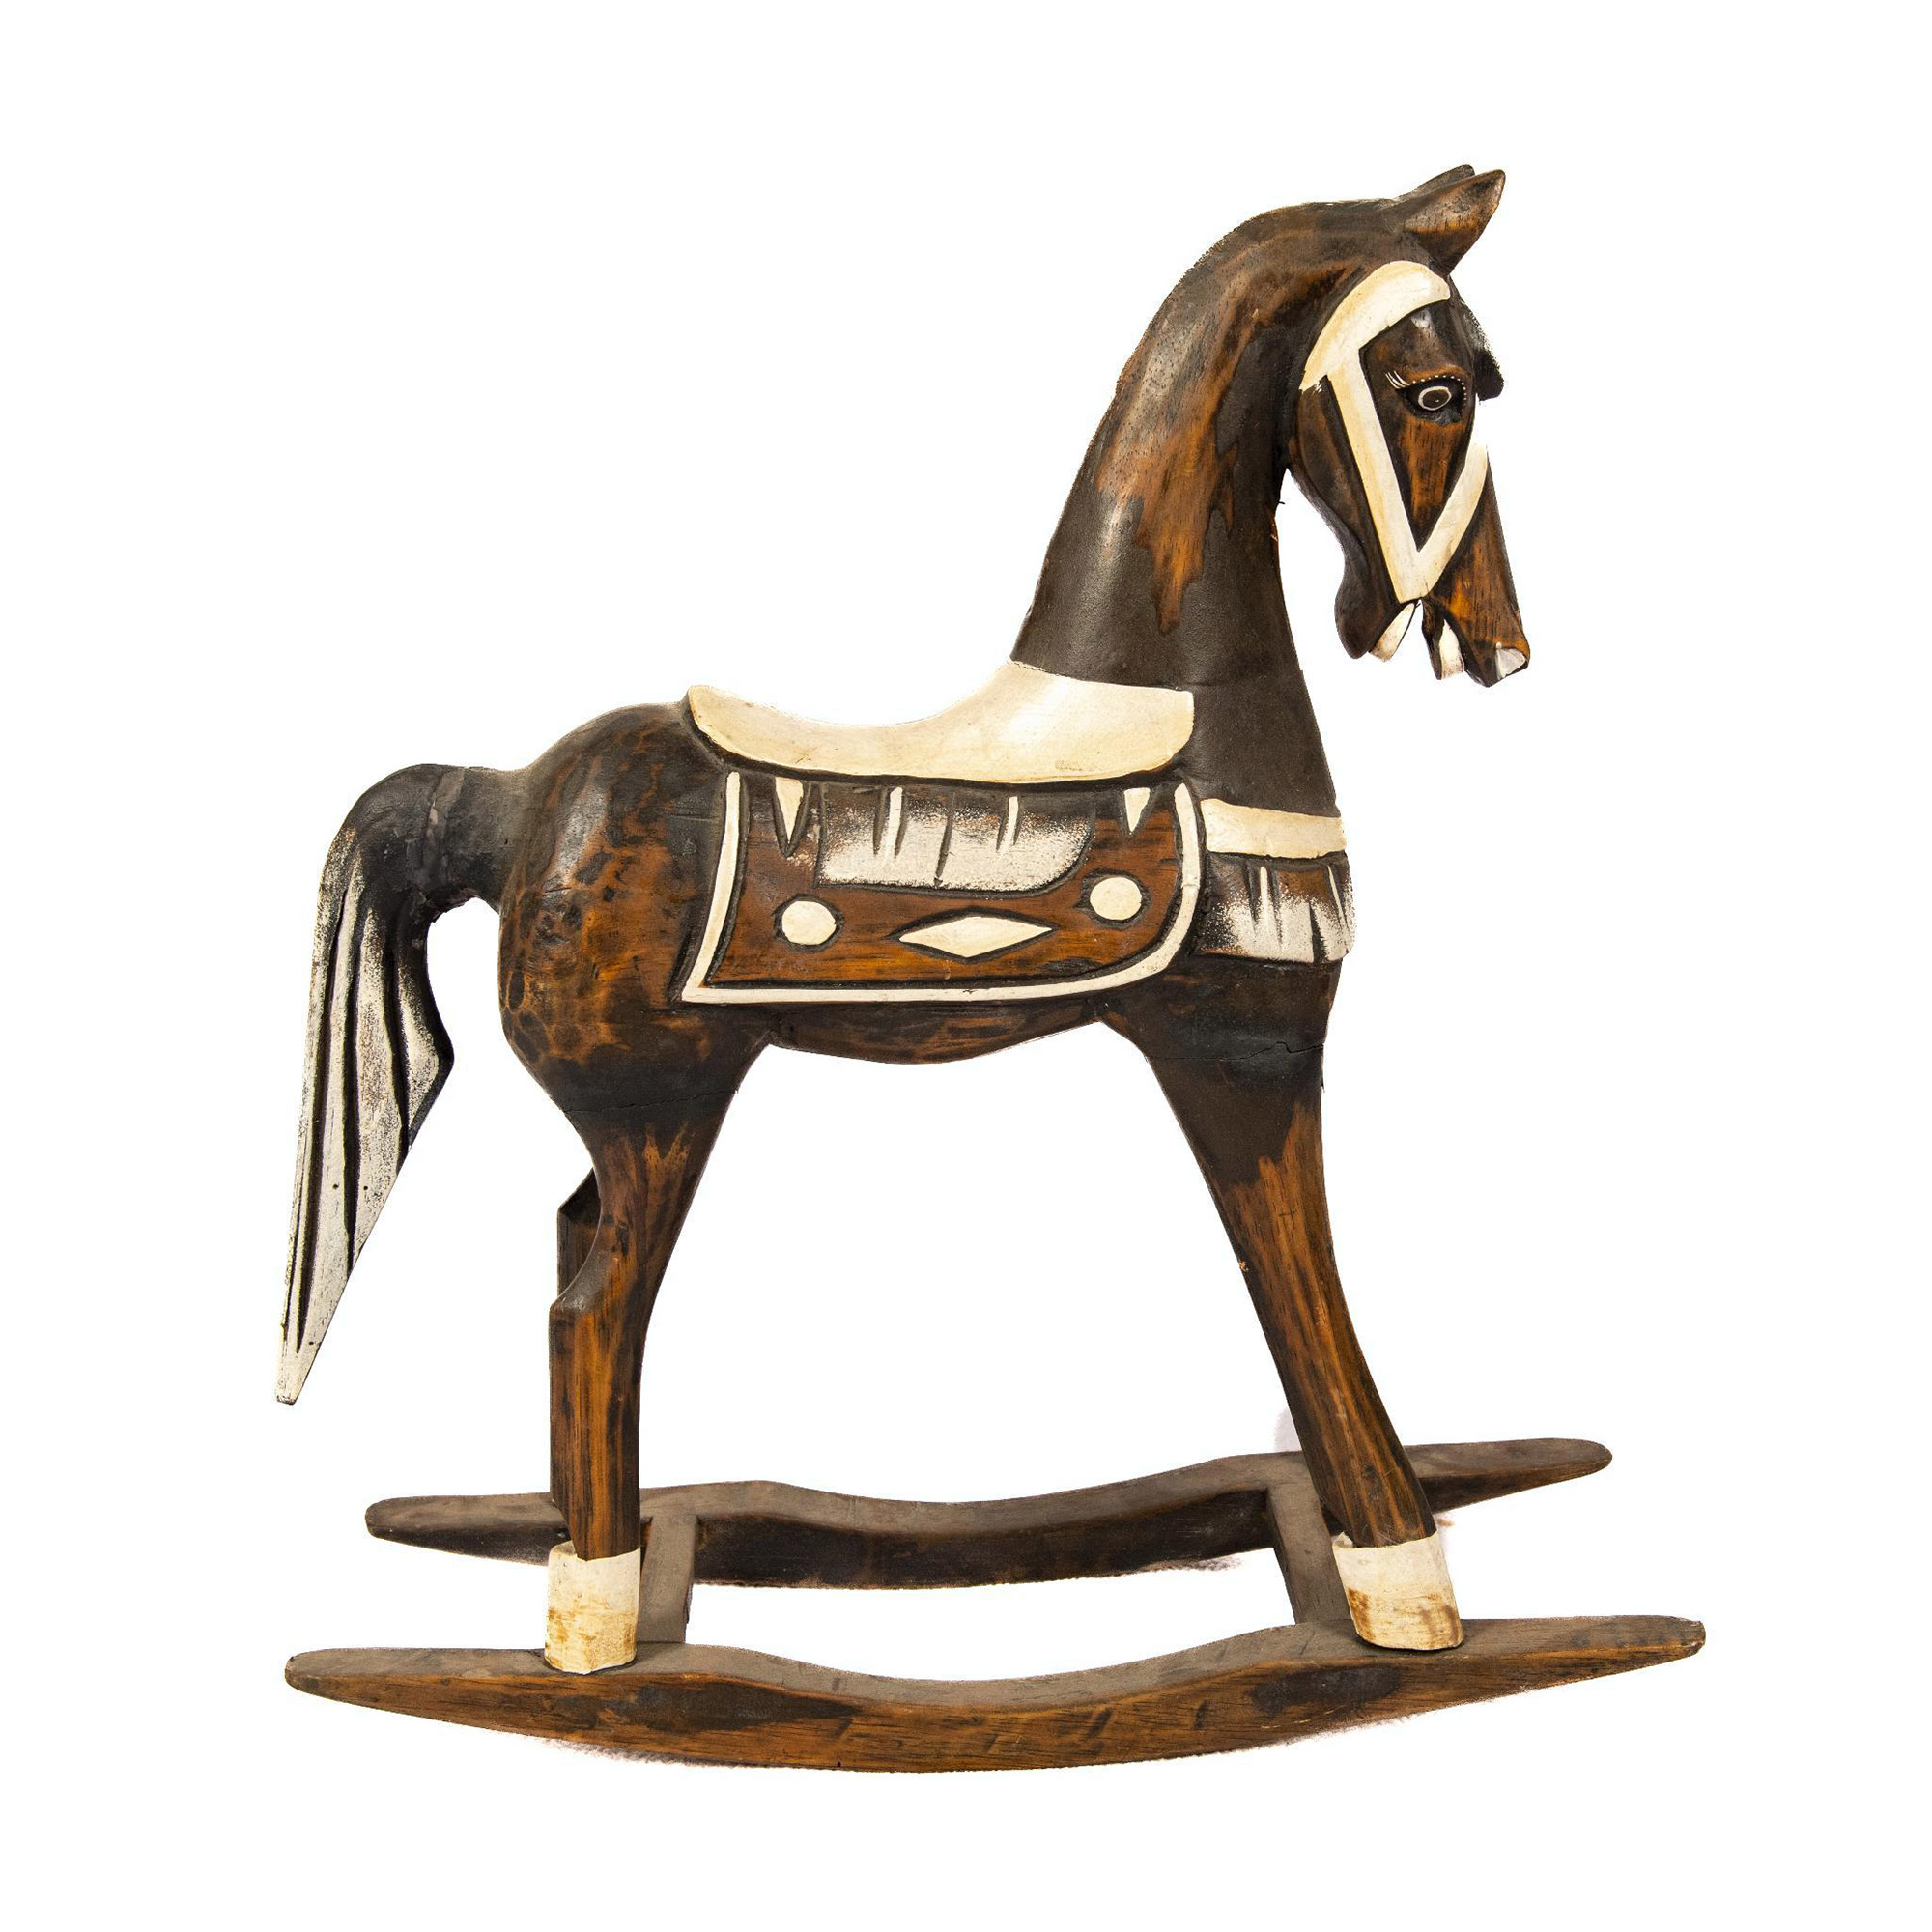 Decorative Rocking Horse Wood Carving - Image 2 of 5